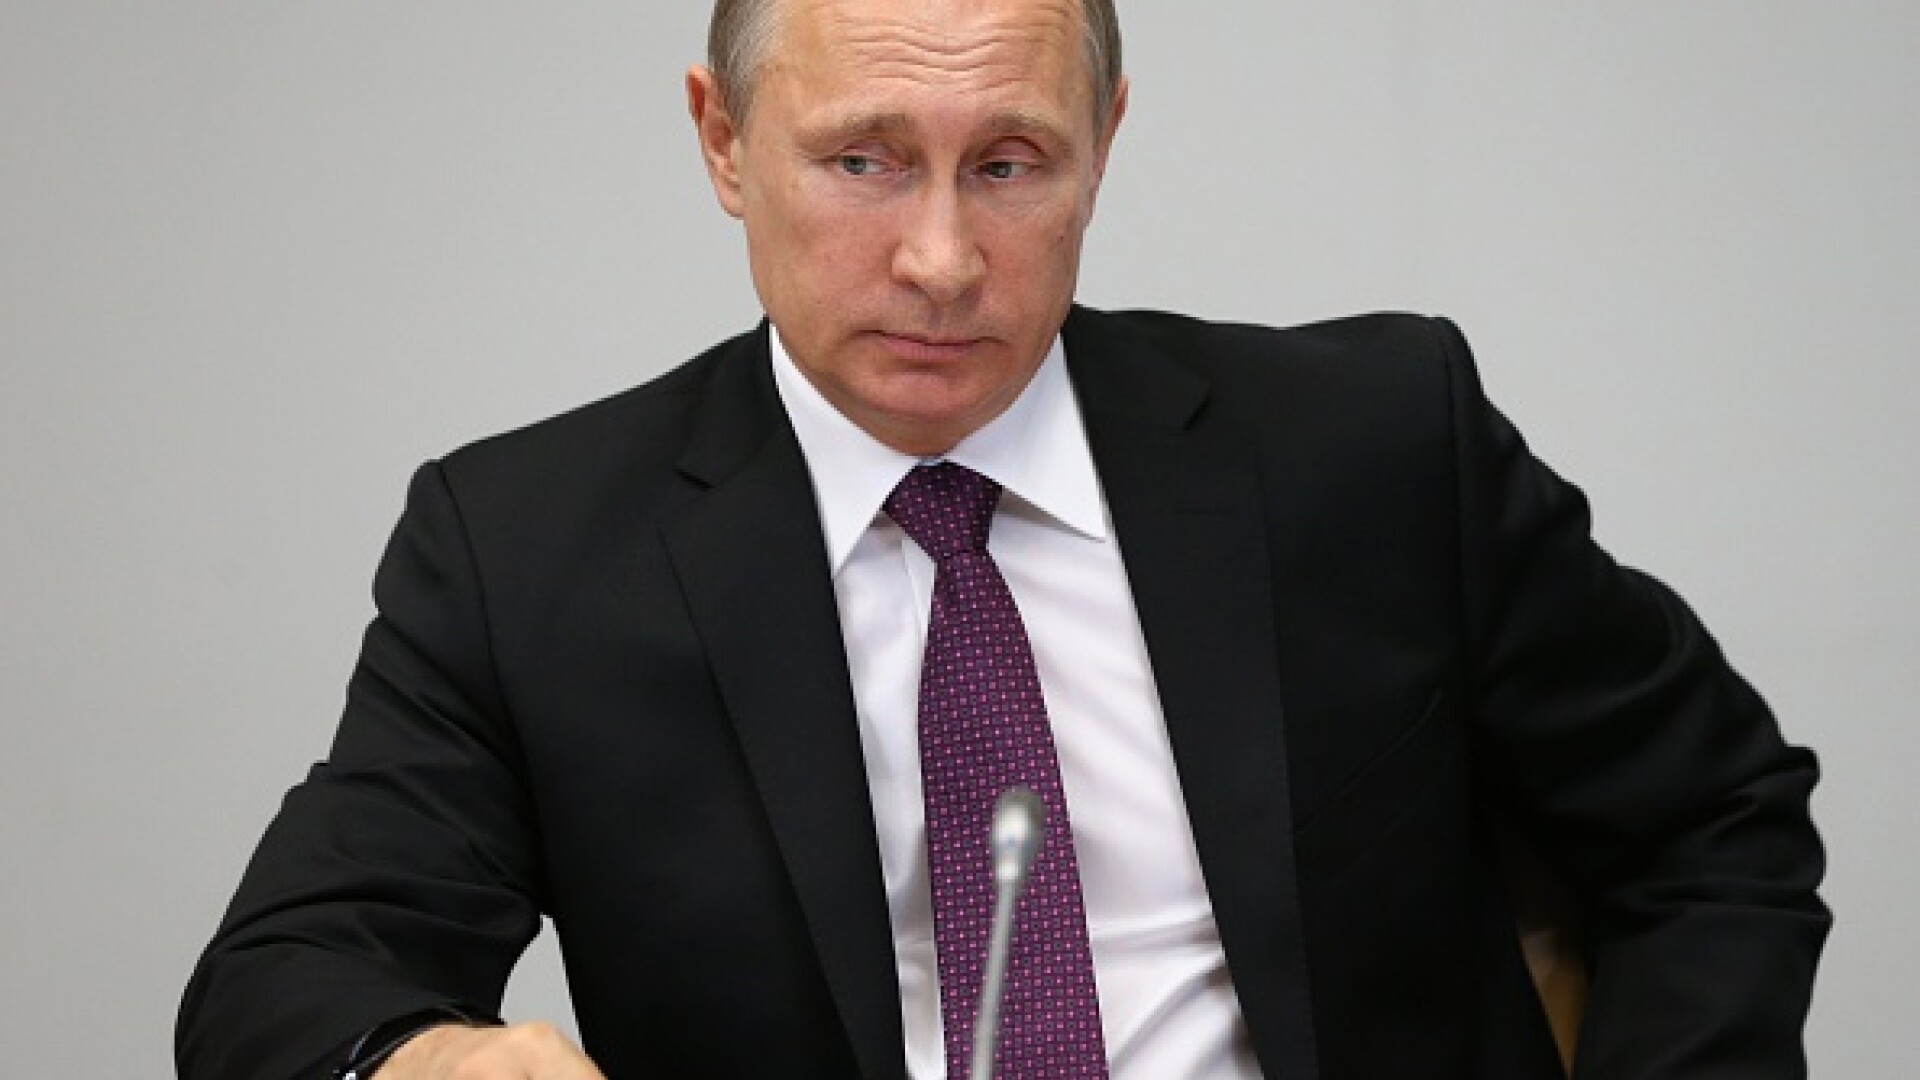 Vladimir Putin - Getty